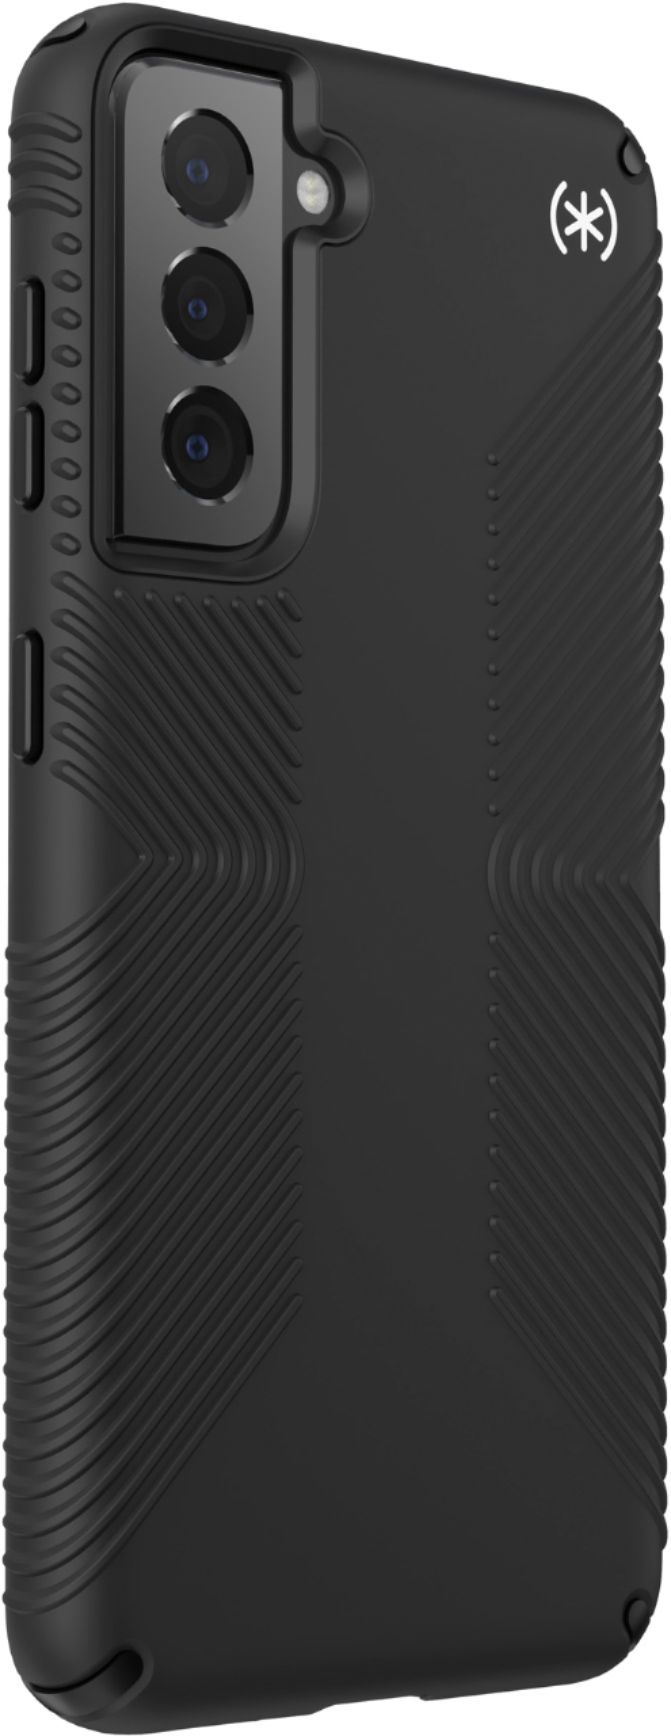 Angle View: Speck - Presidio2 Grip Case for Samsung Galaxy S21 5G - Black